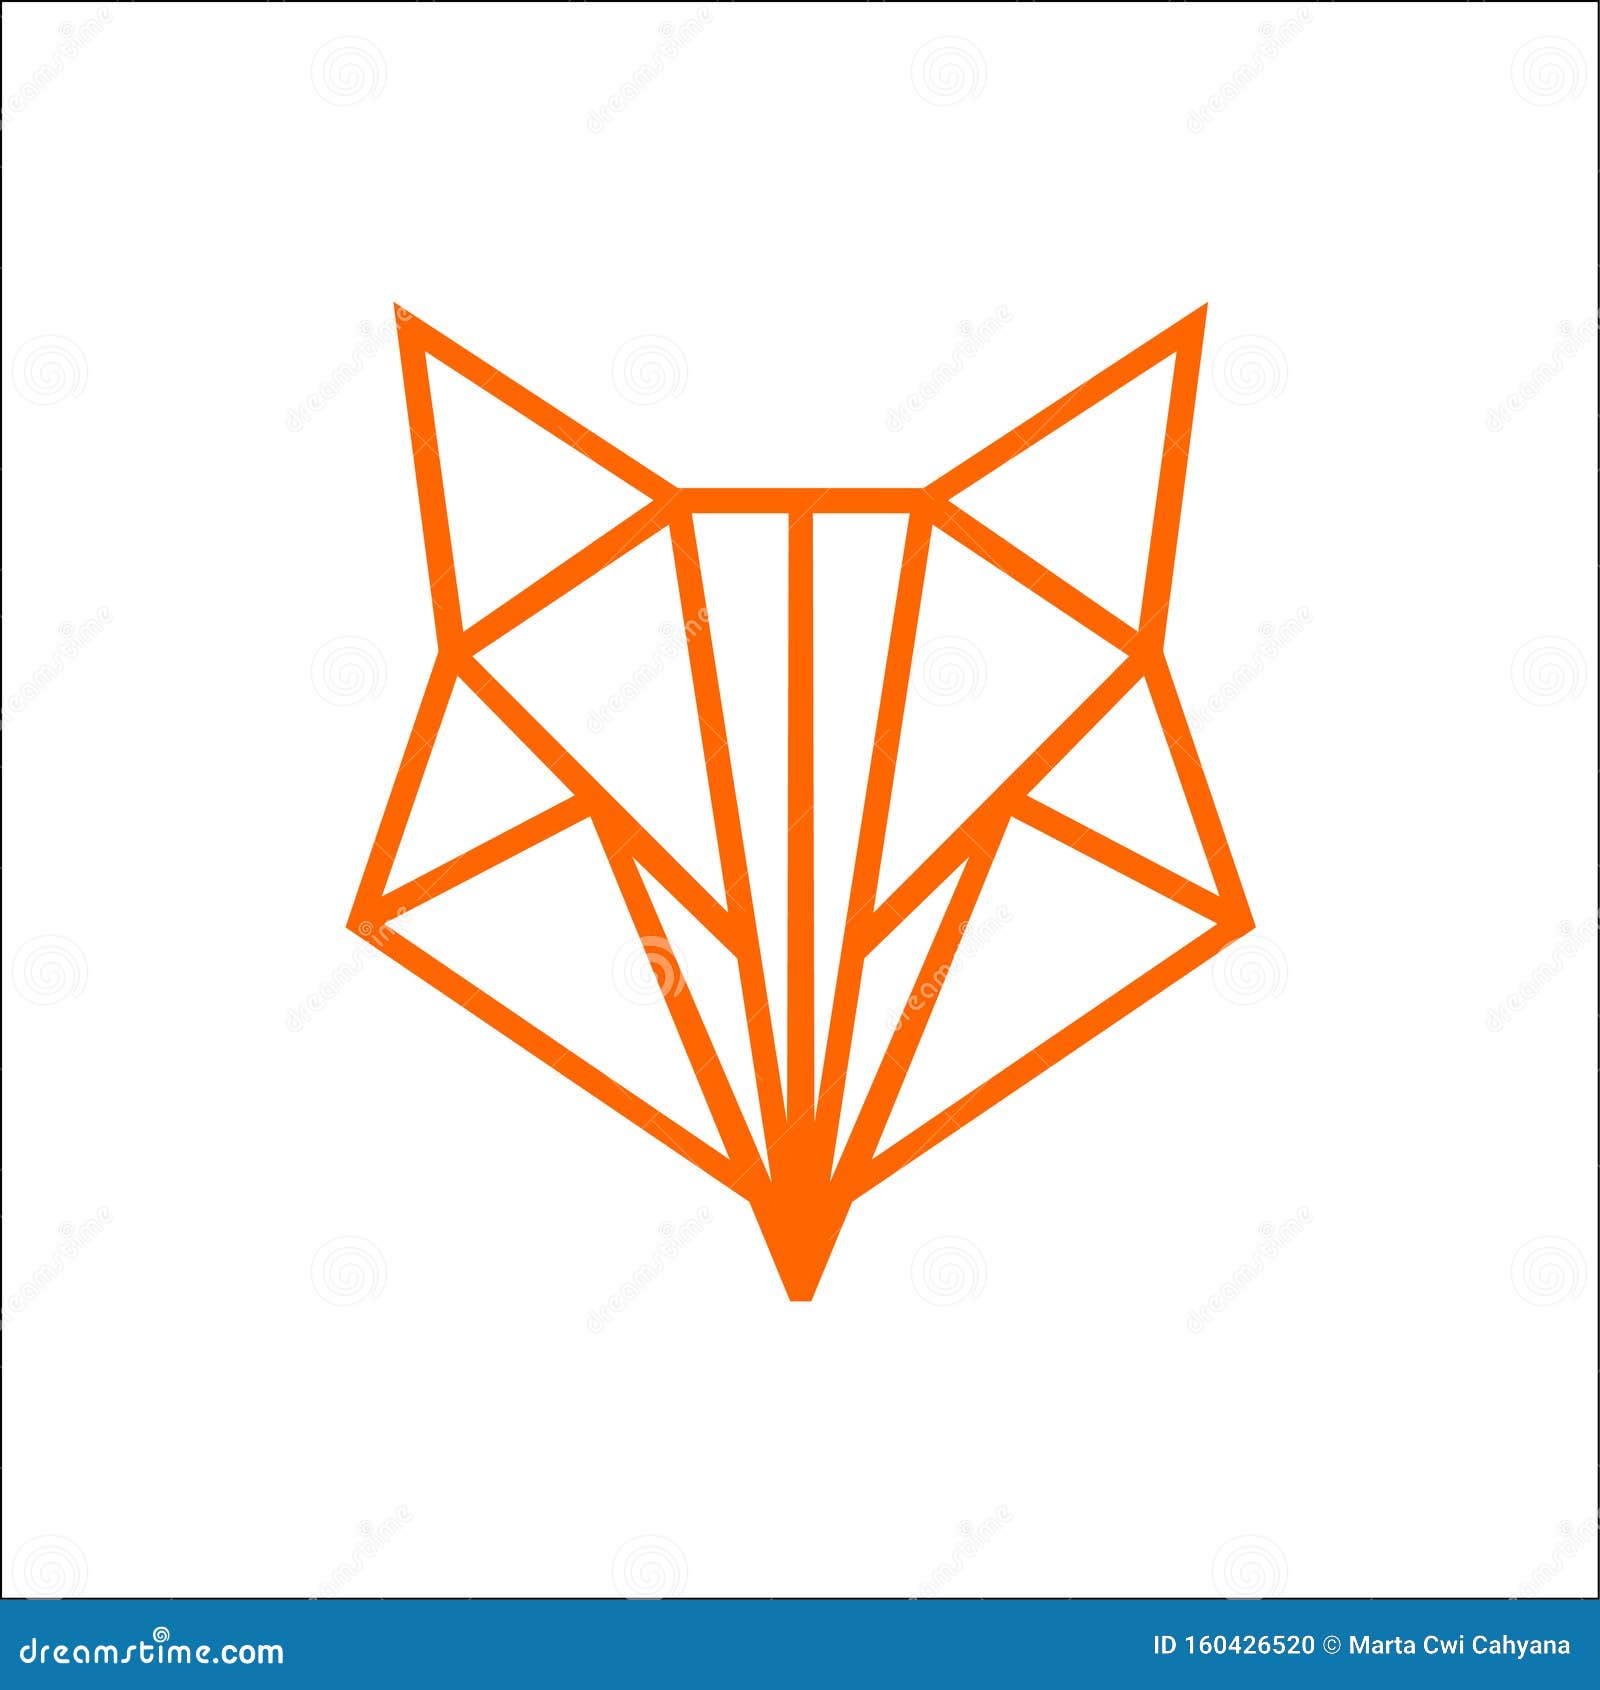 Geometric Fox Tattoo Idea  BlackInk AI